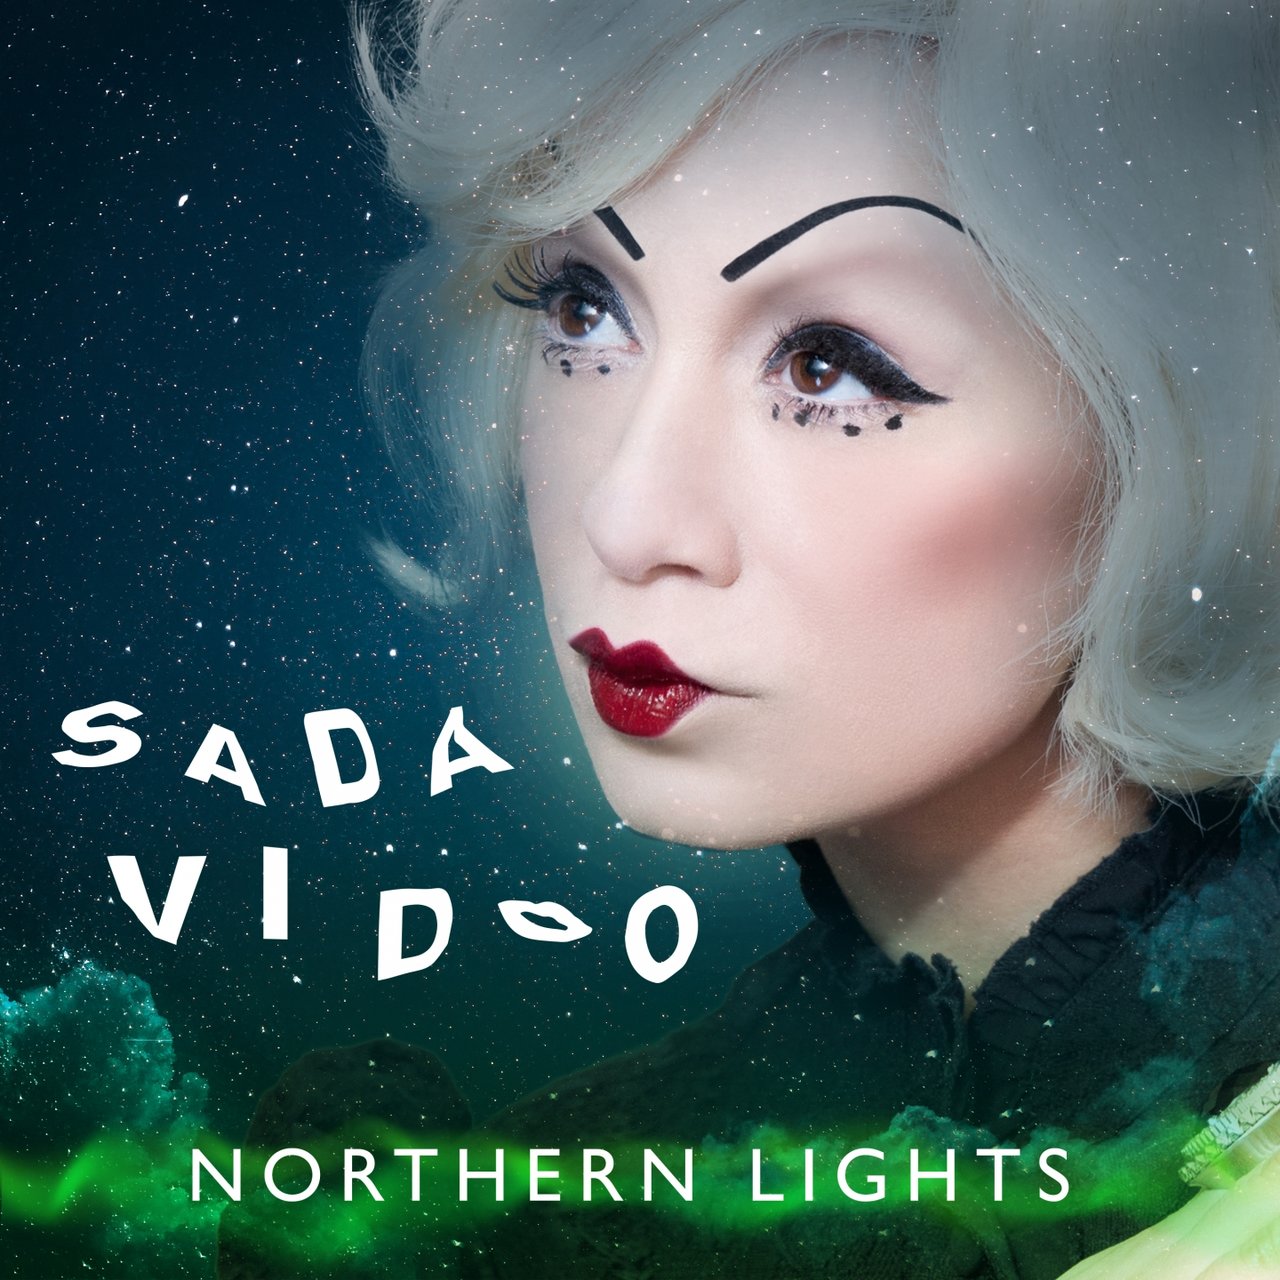 Sada Vidoo Northern Lights cover artwork